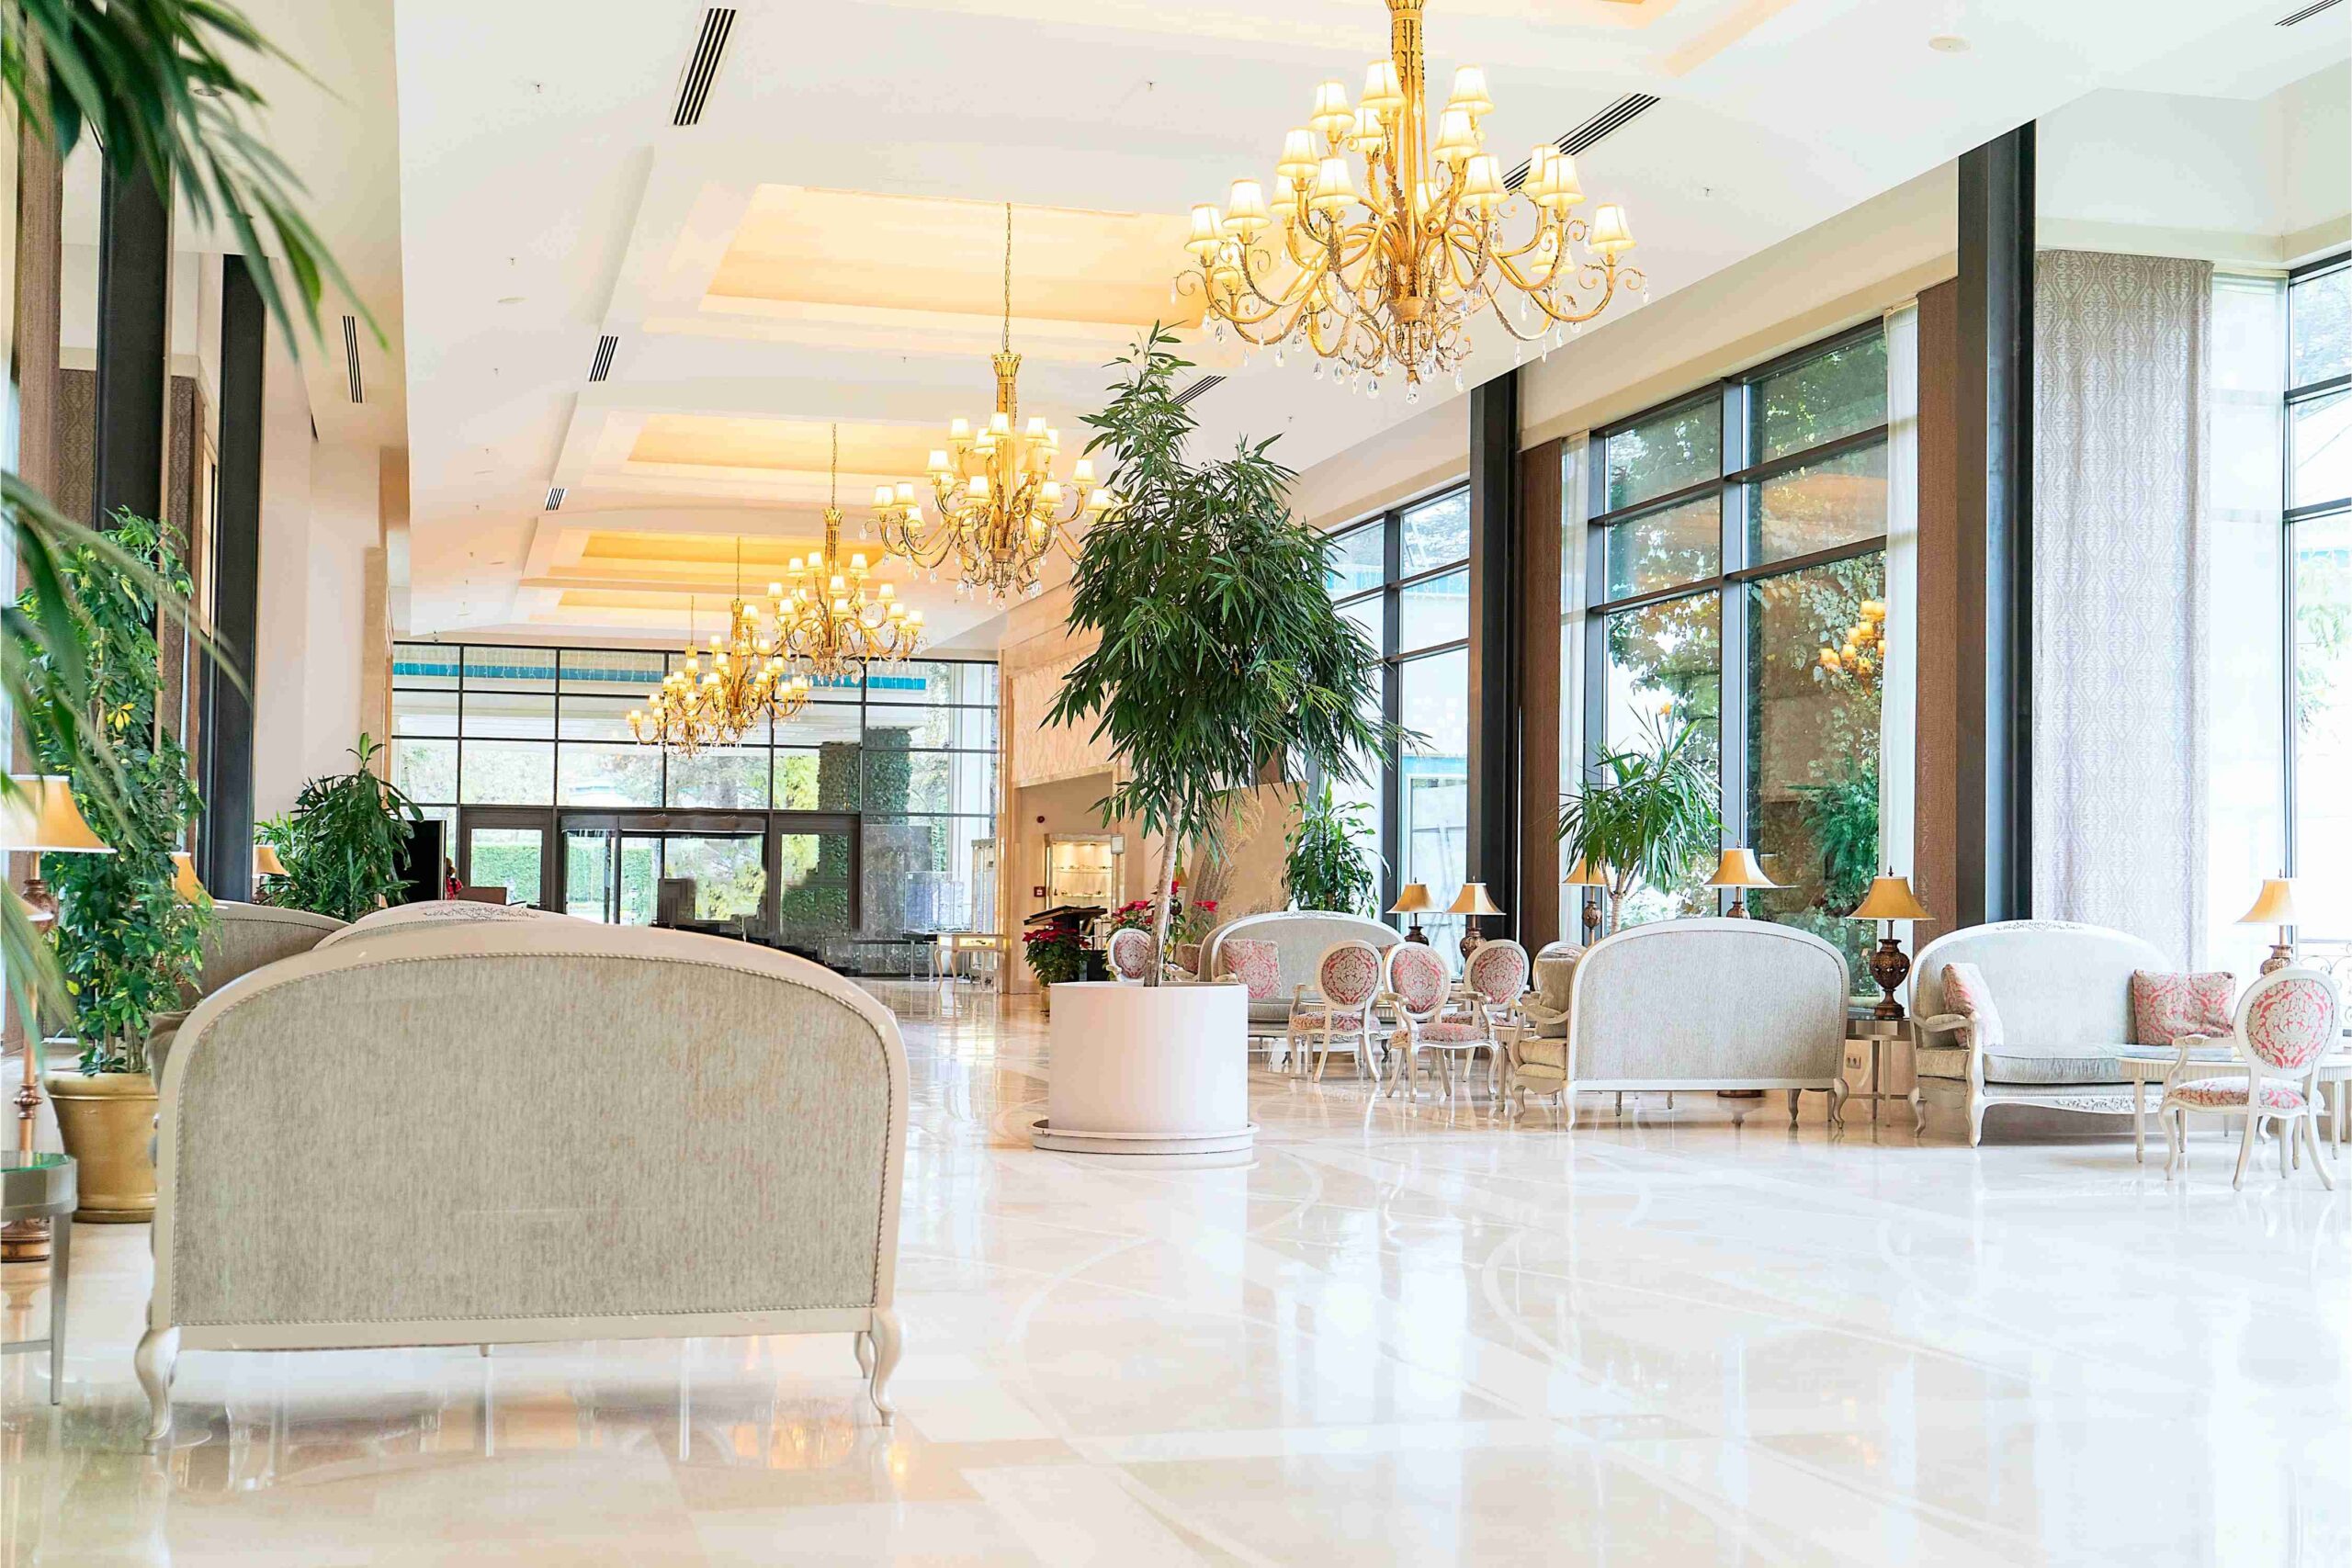 5 Star hotel lobby interior design